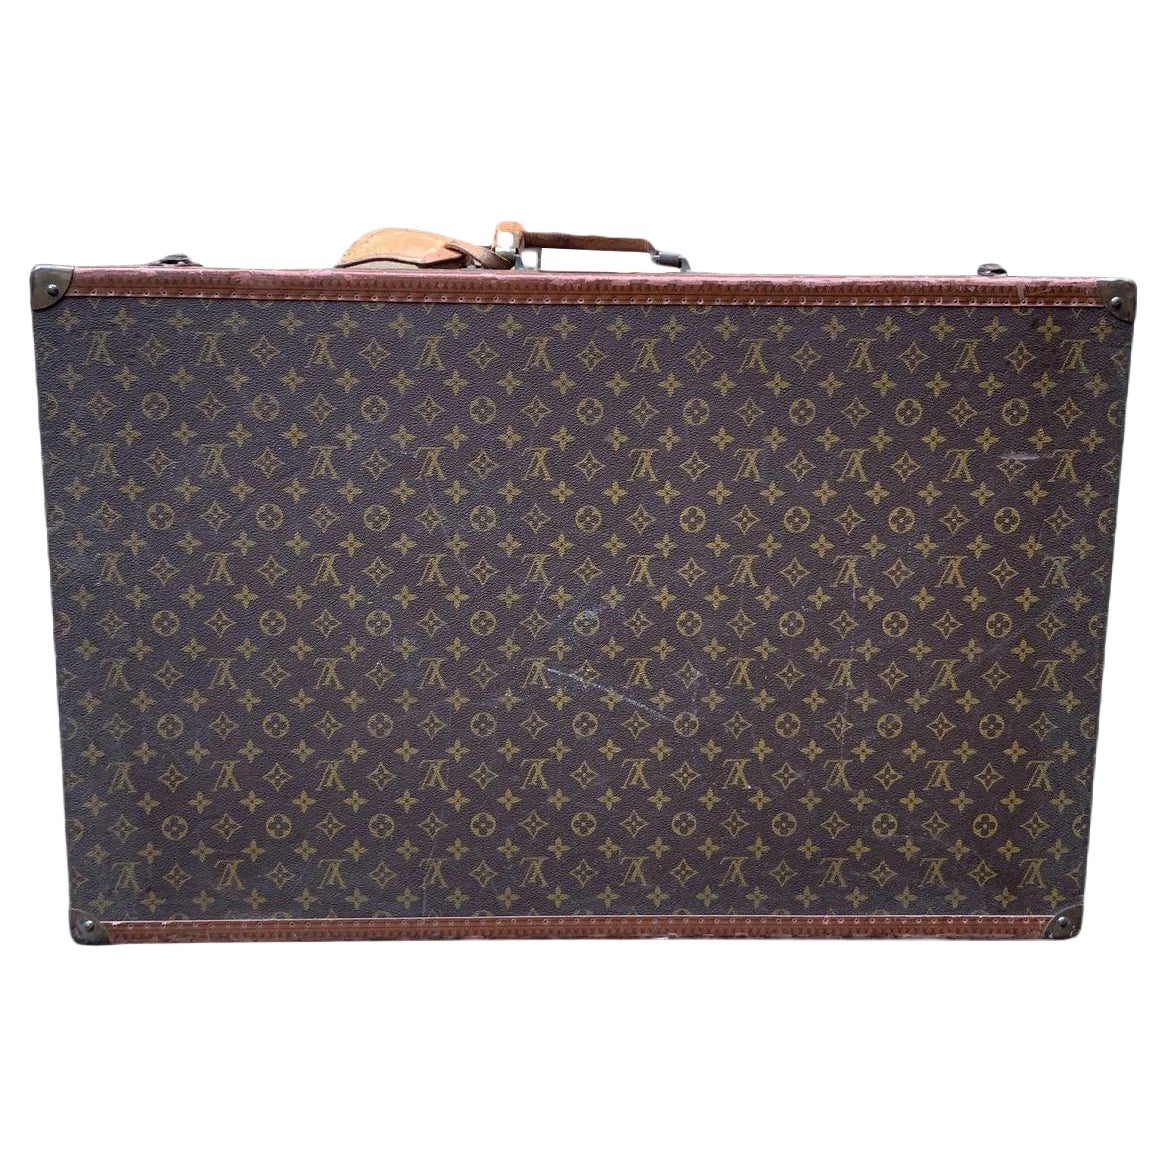 Louis Vuitton Vintage Monogram Canvas Braken 80 Trunk Luggage Bag